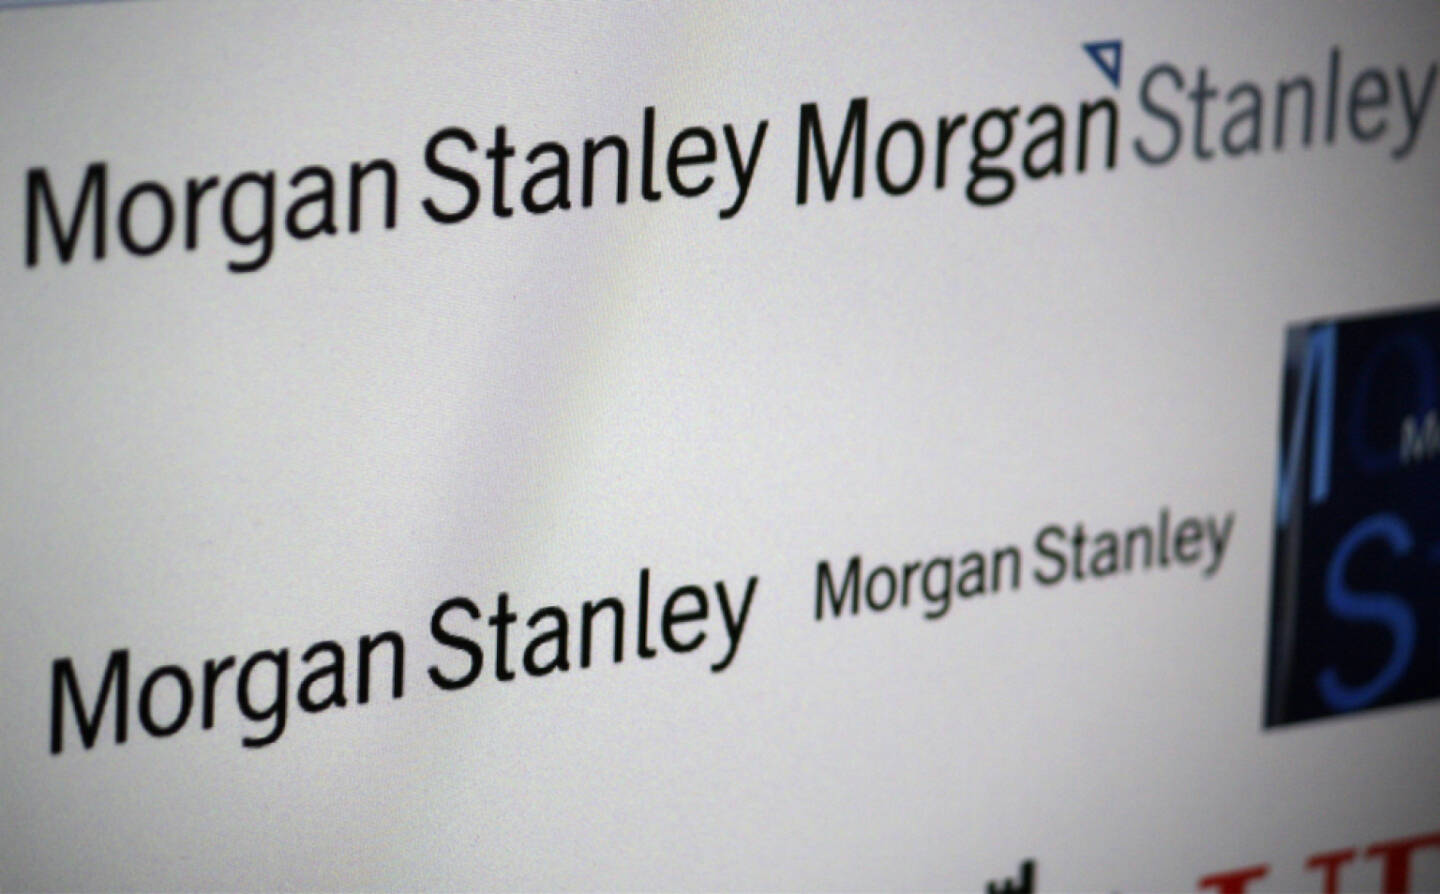 Morgan Stanley, <a href=http://www.shutterstock.com/gallery-320989p1.html?cr=00&pl=edit-00>360b</a> / <a href=http://www.shutterstock.com/editorial?cr=00&pl=edit-00>Shutterstock.com</a>, 360b / Shutterstock.com